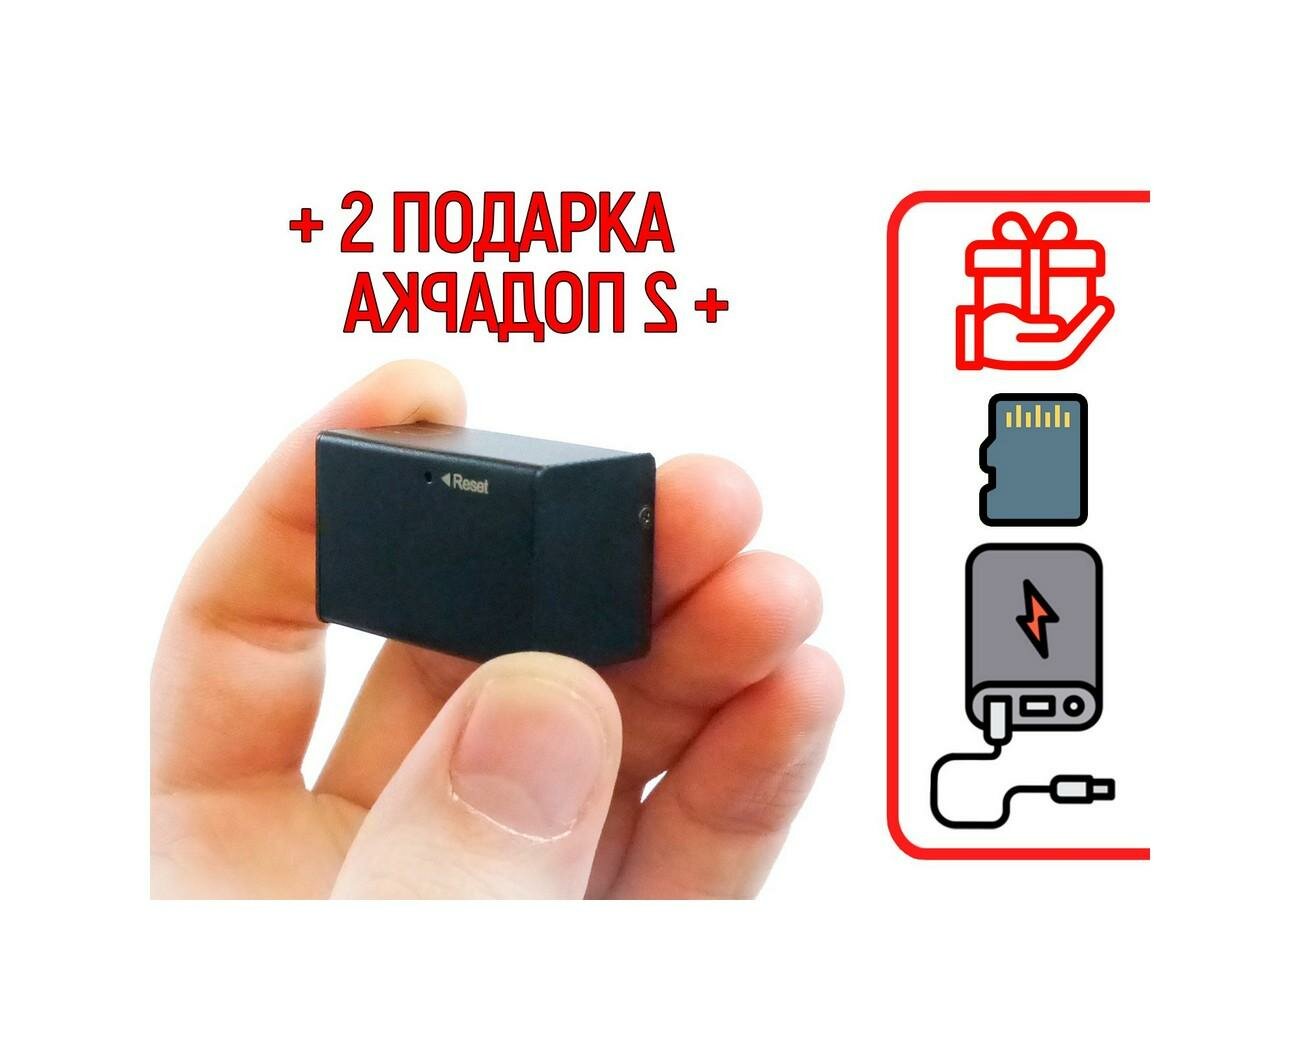 Микро диктофон для записи разговоров Эдик-mini CARD16 mod: A-99 (O43647SA) + 2 подарка (microSD и Повер-банк 10000 mAh) - очень маленький 18х23х37 мм,